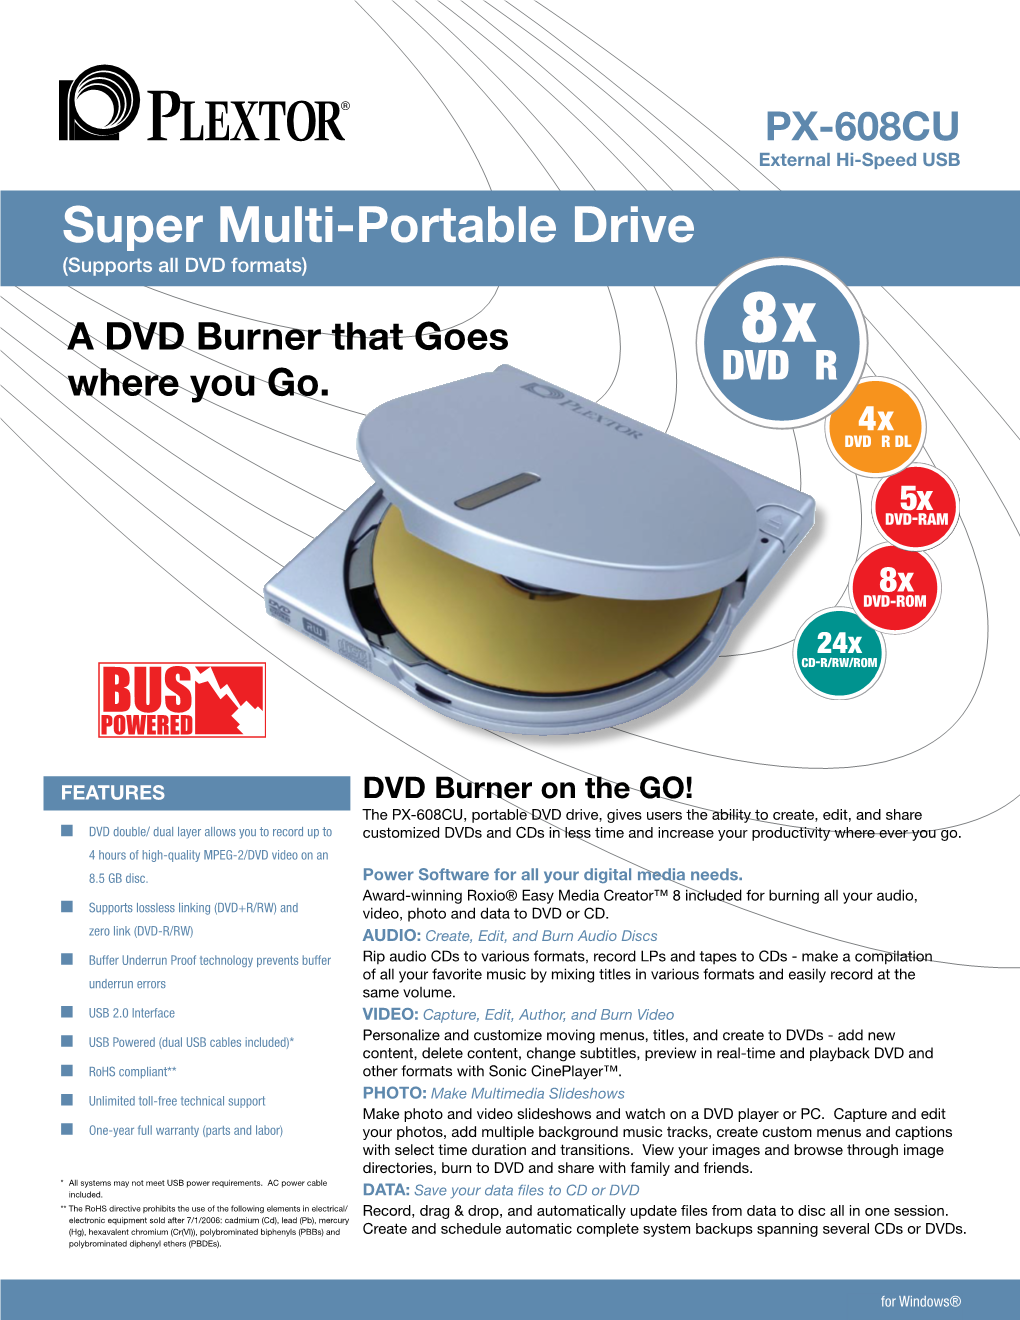 Super Multi-Portable Drive (Supports All DVD Formats)